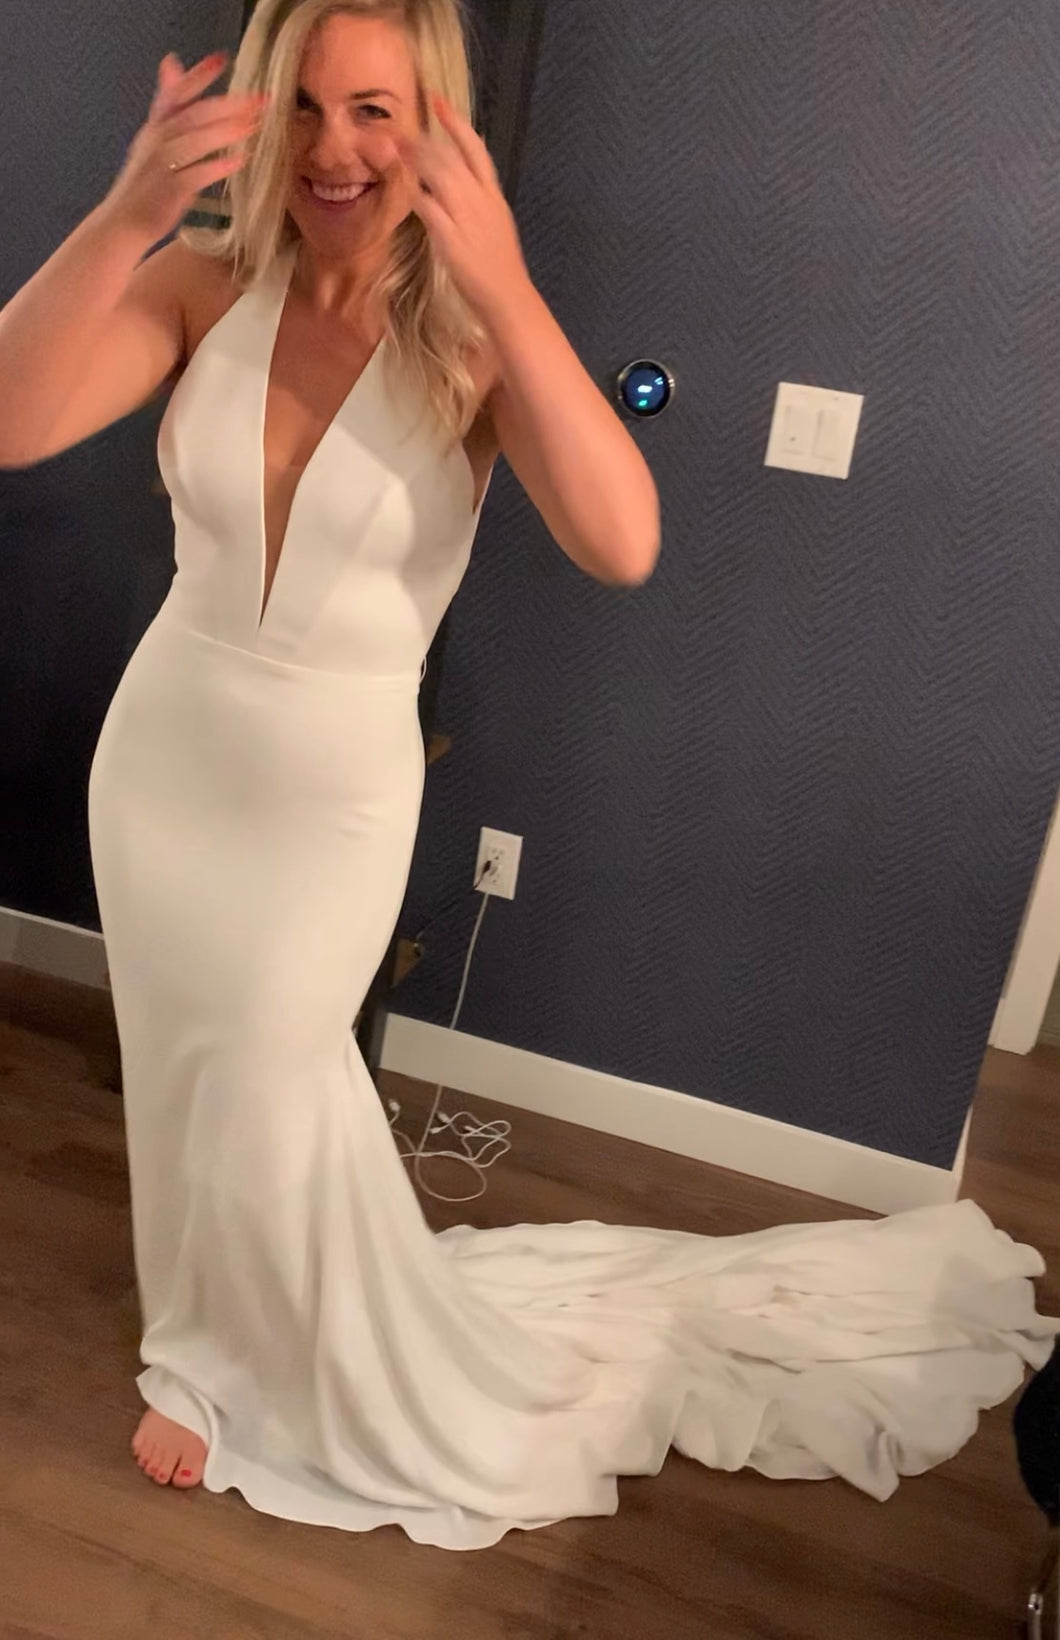 Mikaella '2150' wedding dress size-06 NEW